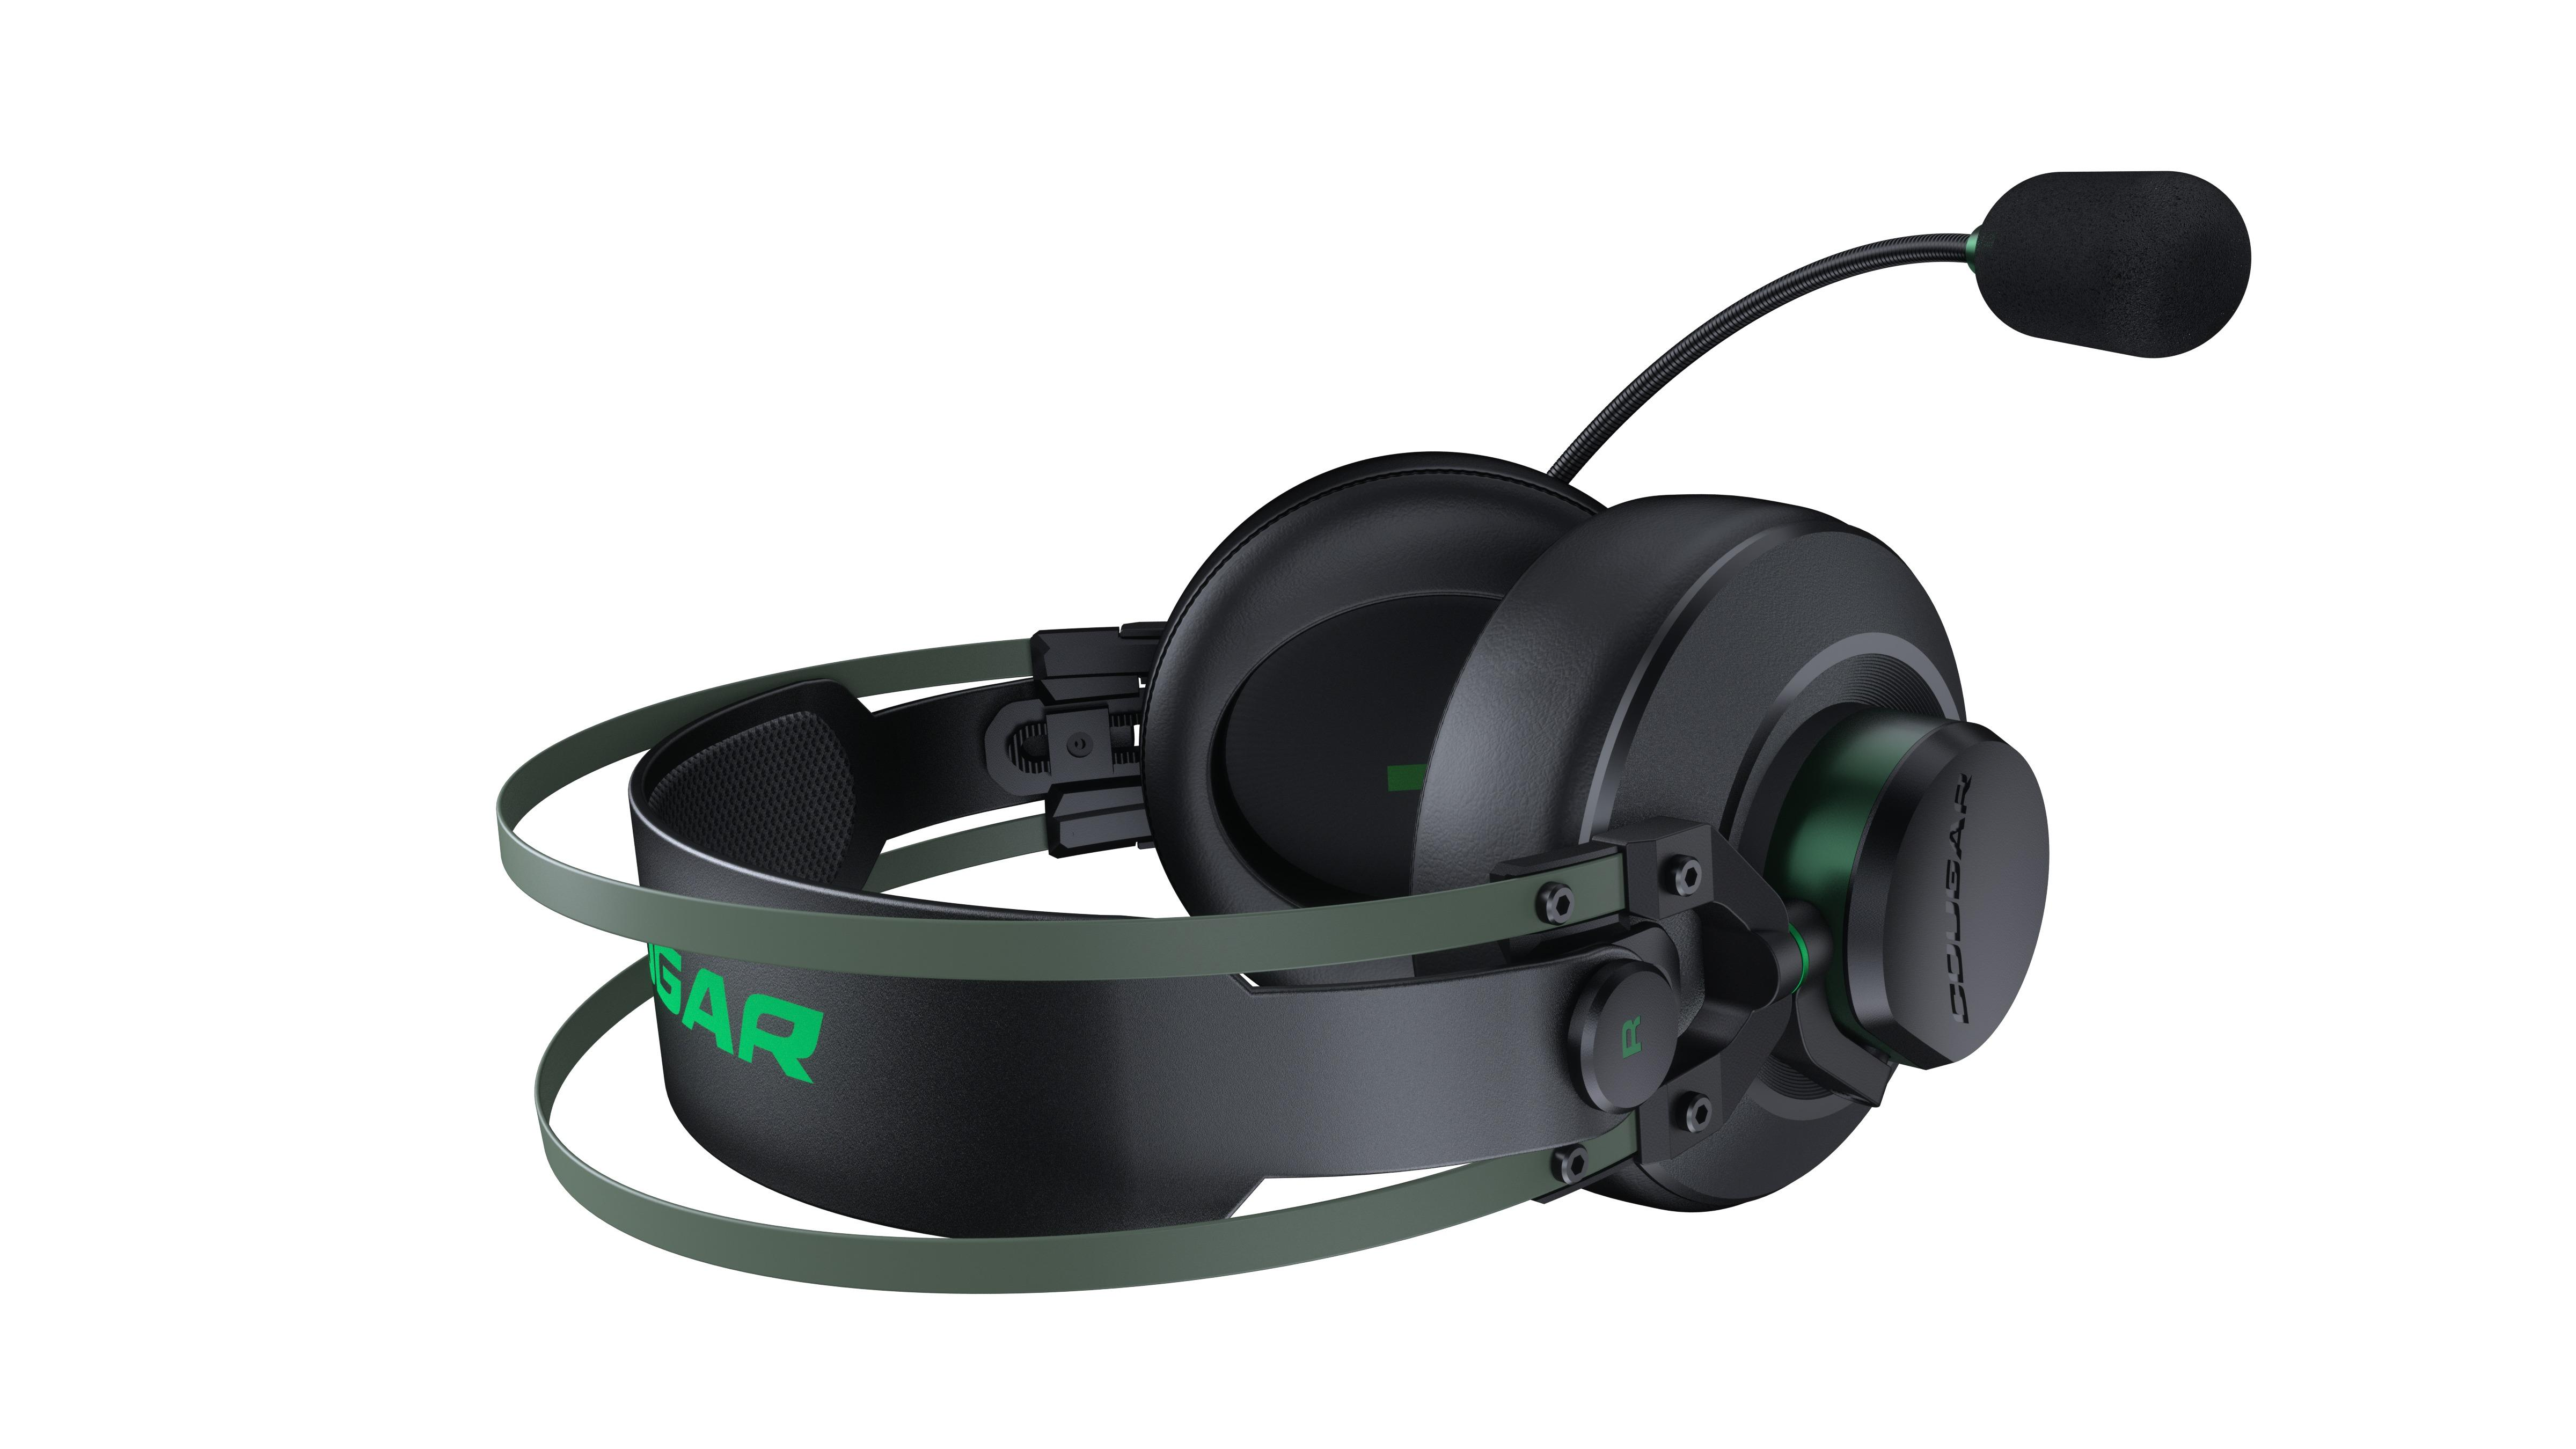 VM410 Over-ear XB, schwarz-grün Gaming Headset COUGAR